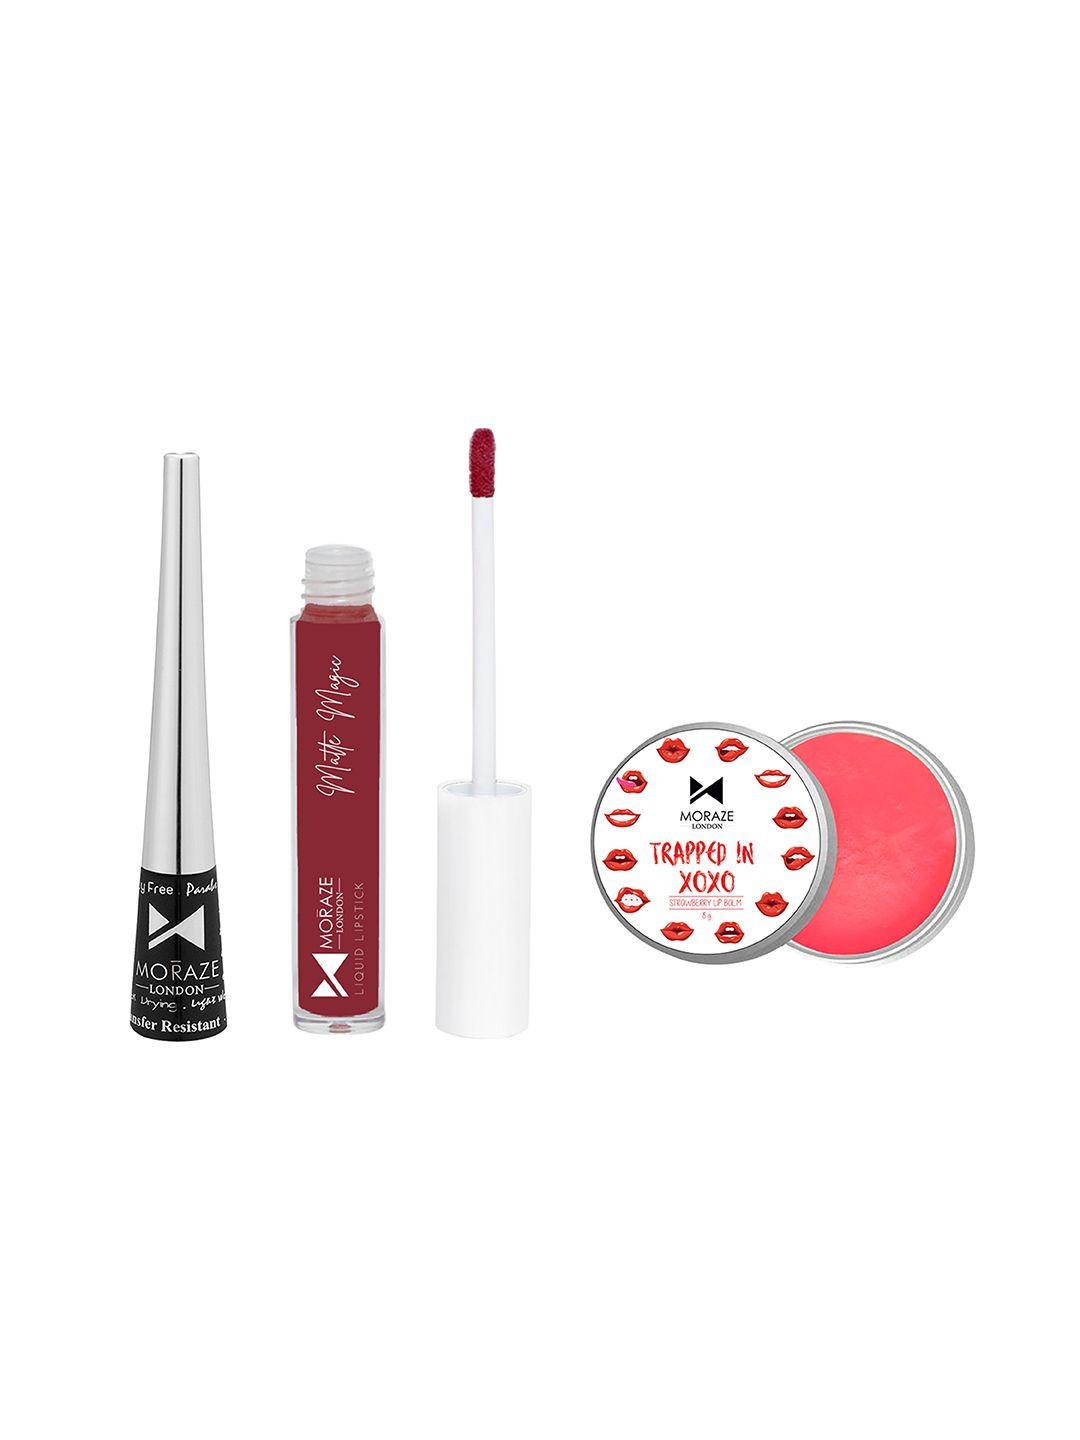 moraze combo lipstick-no regret with eyeliner & lip balm-strawberry